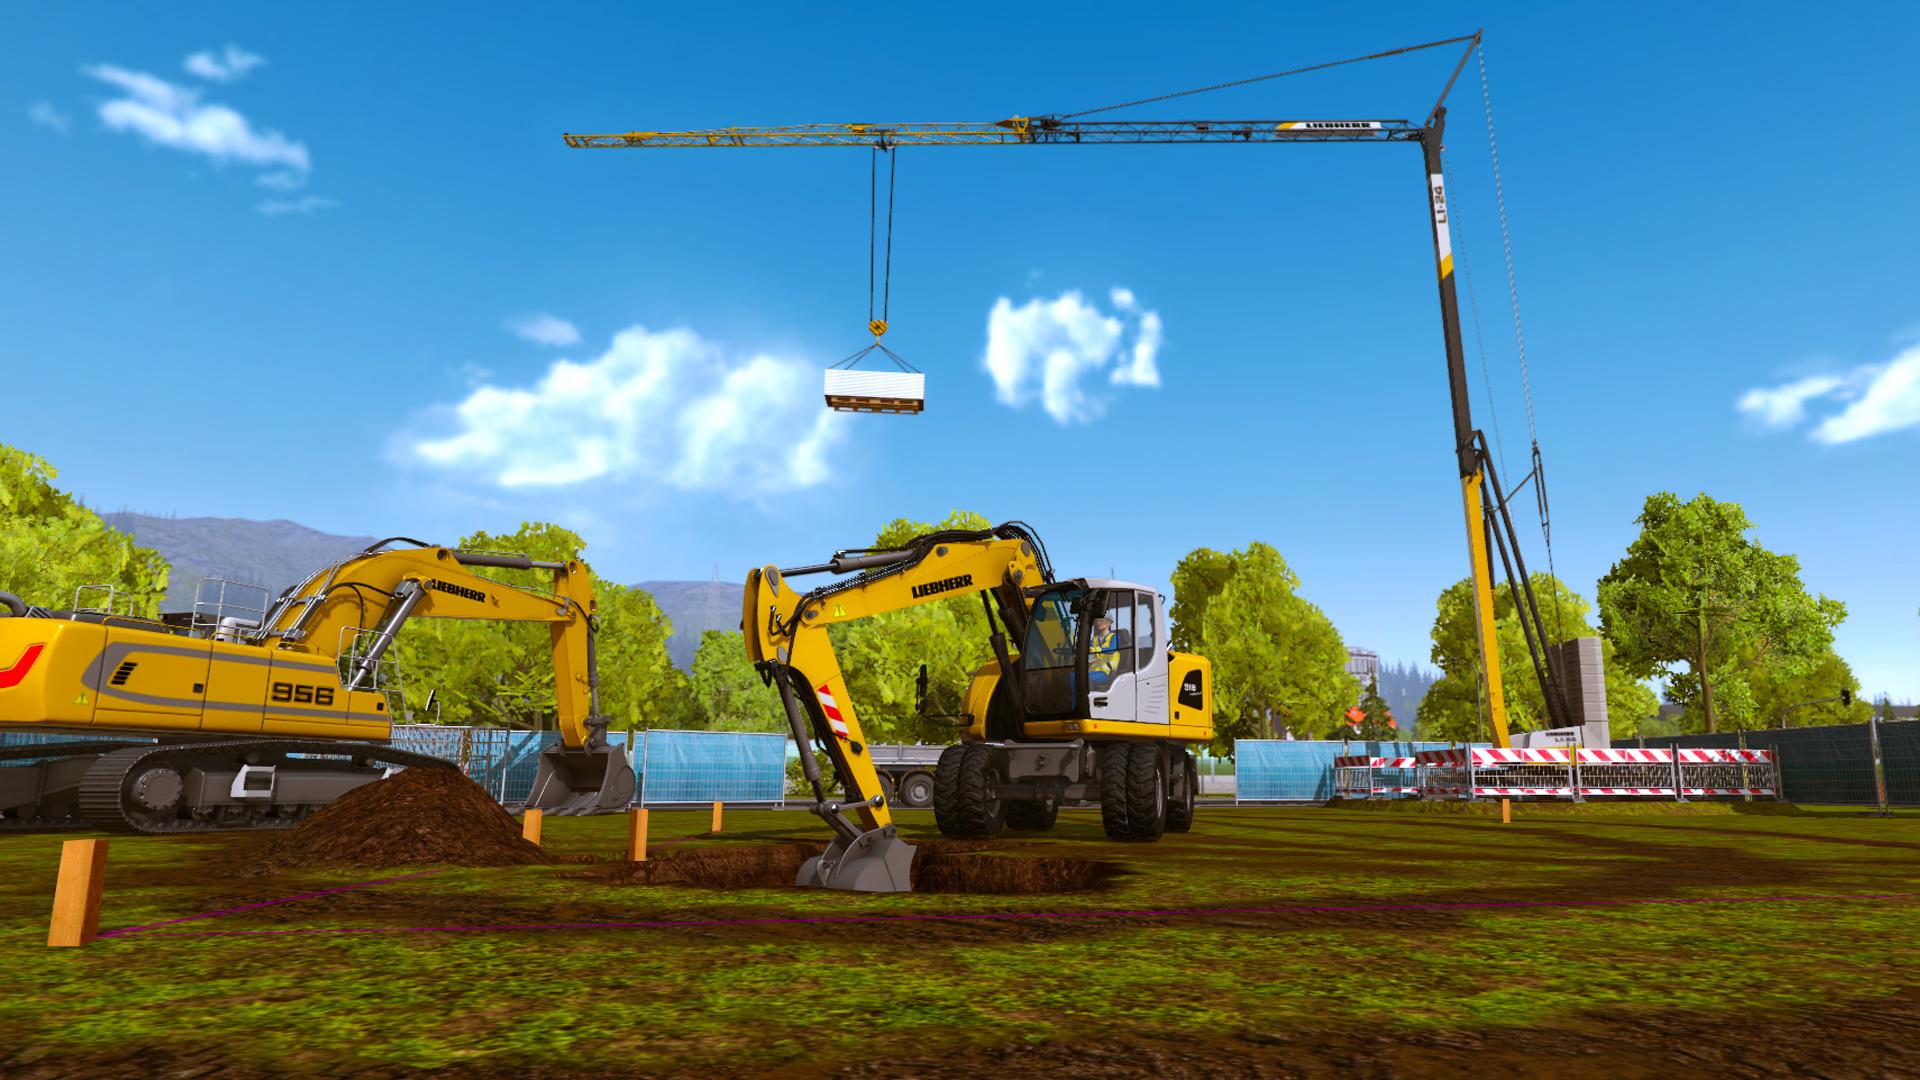 Screenshot №5 from game Construction Simulator 2015